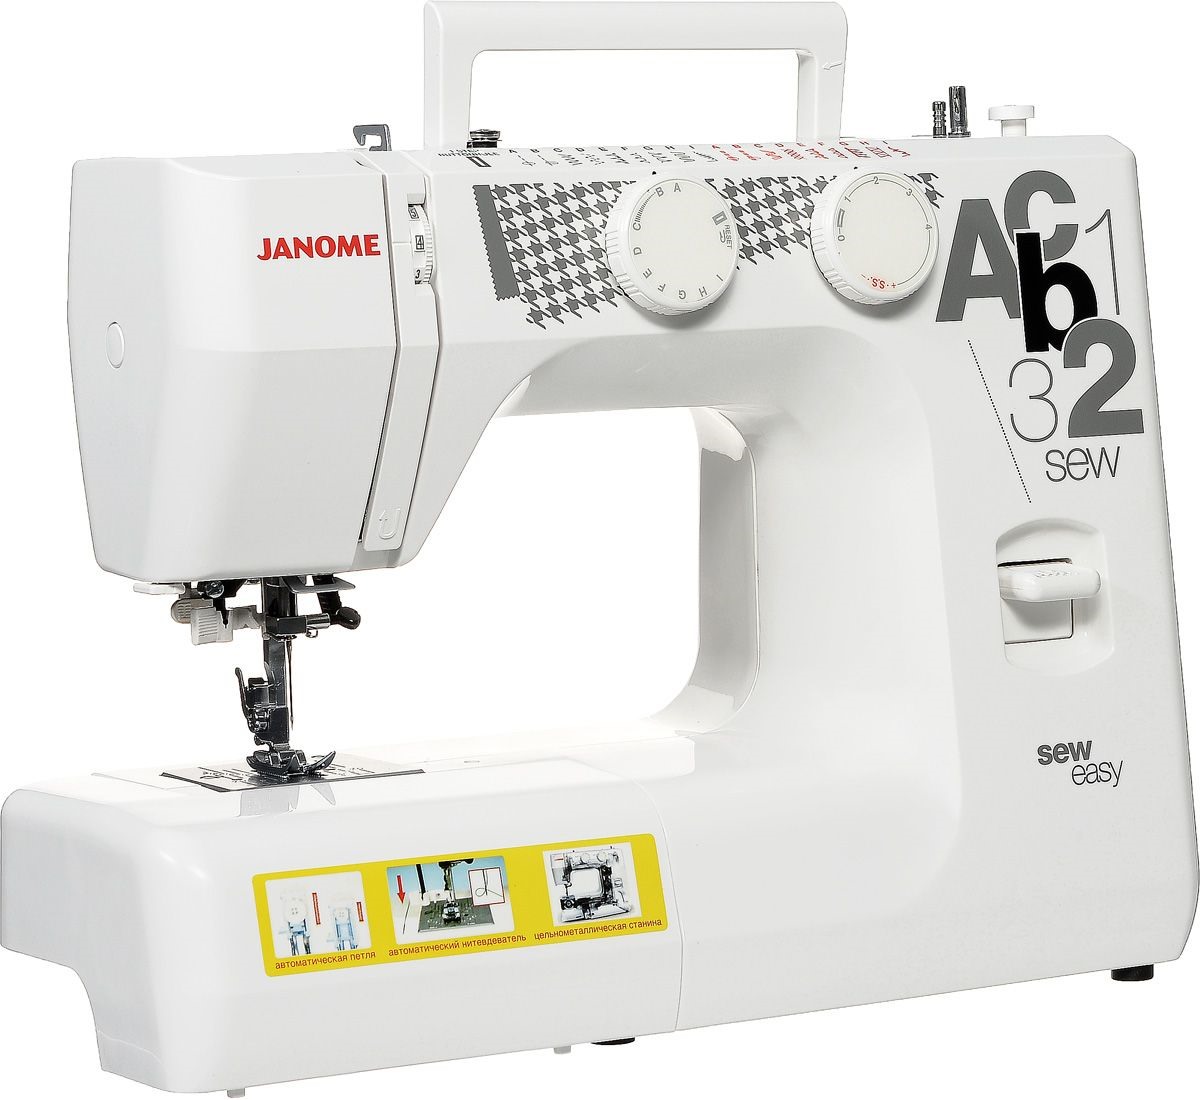 Швейная машинка липецк. Швейная машинка Джаноме. Джаноме Sew easy. Бытовая швейная машина "Janome 3112m". Швейная машина Janome Sew Mini Deluxe.